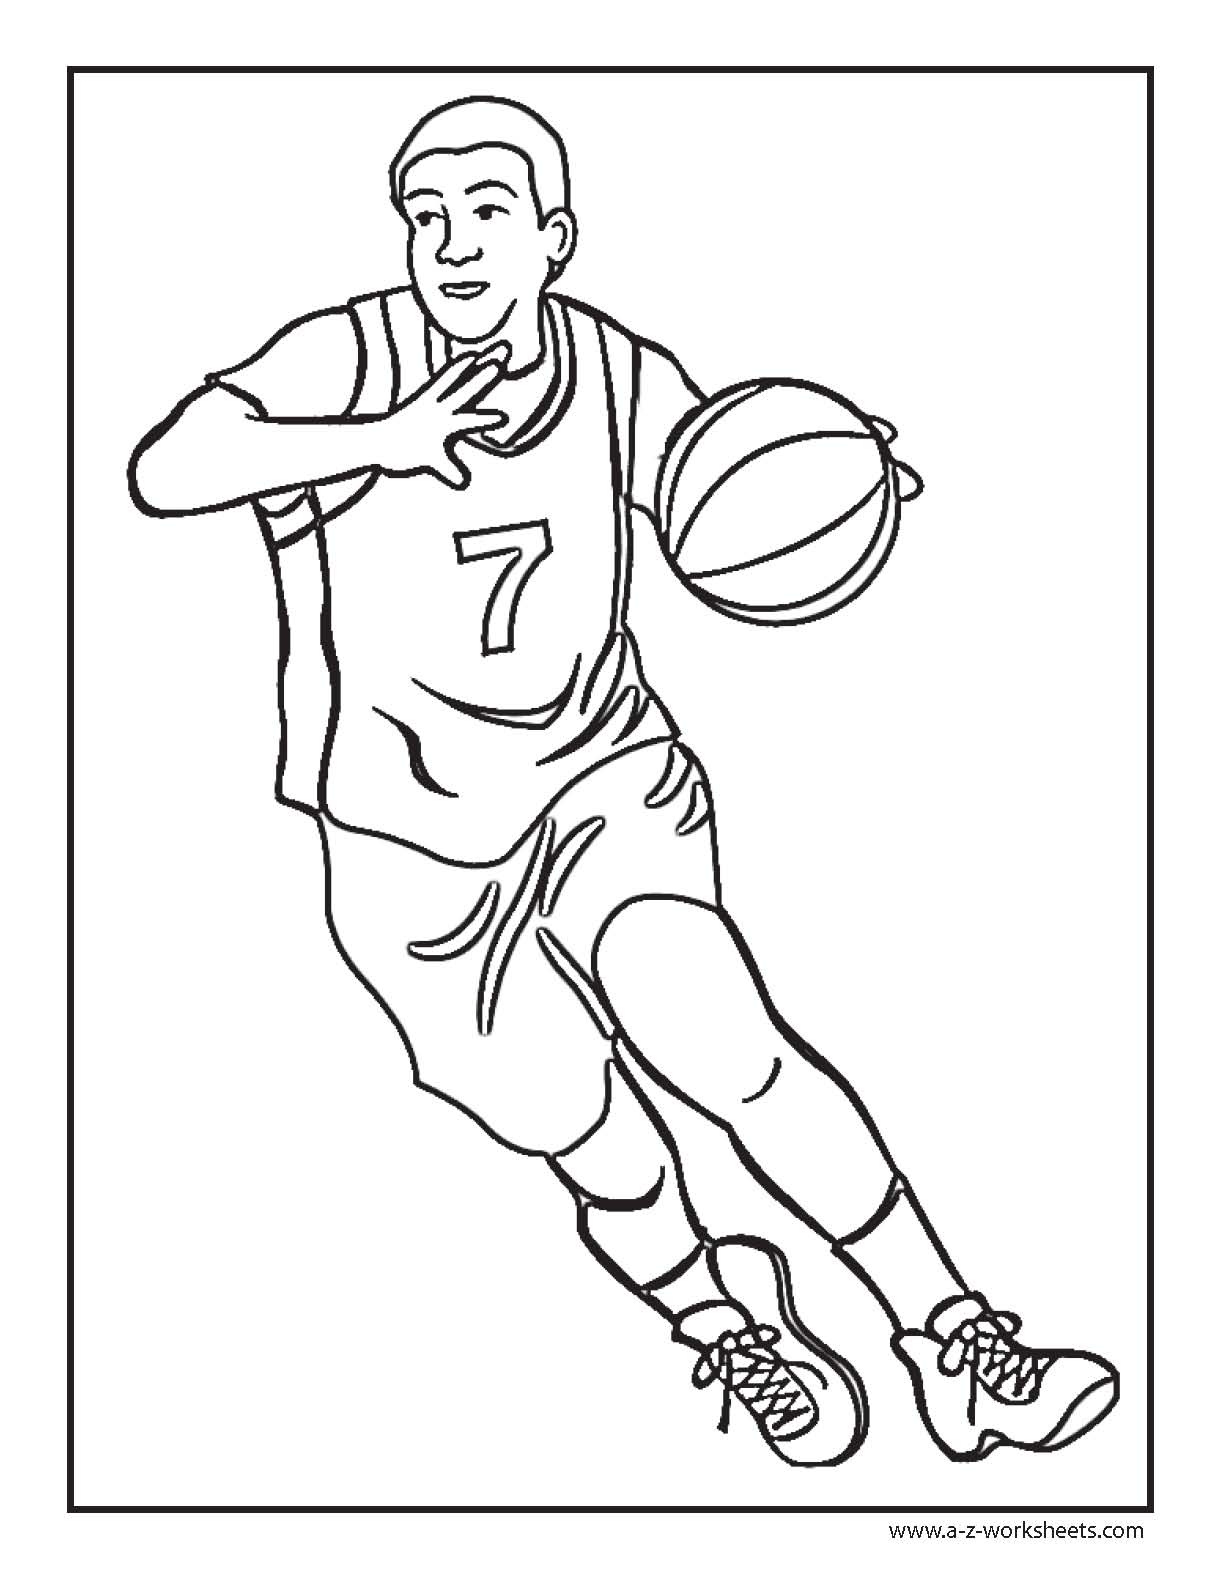 Баскетбол рисунок карандашом поэтапно